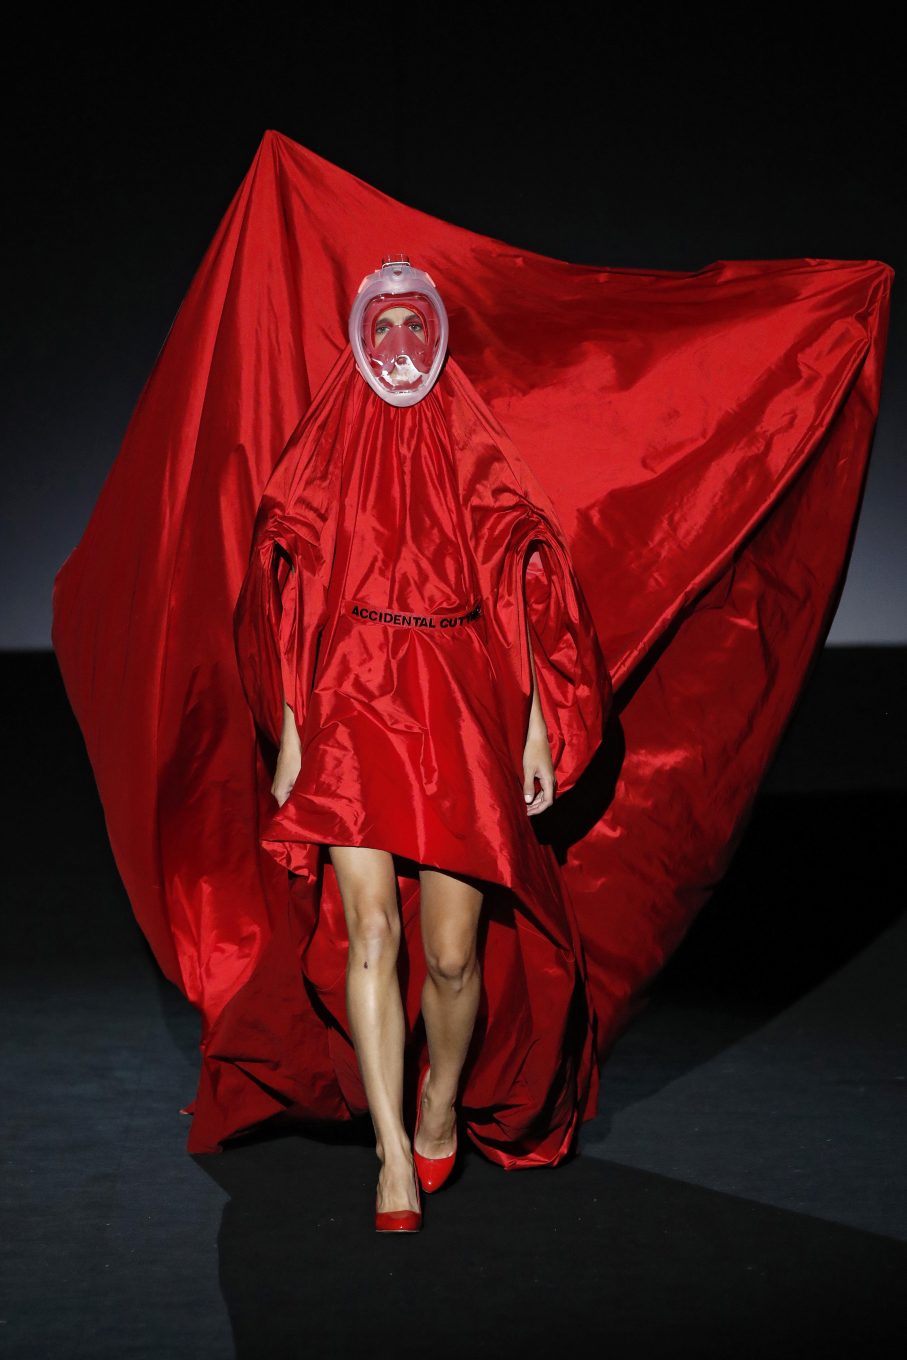 Modelo con vestido rojo de Accidental Cutting